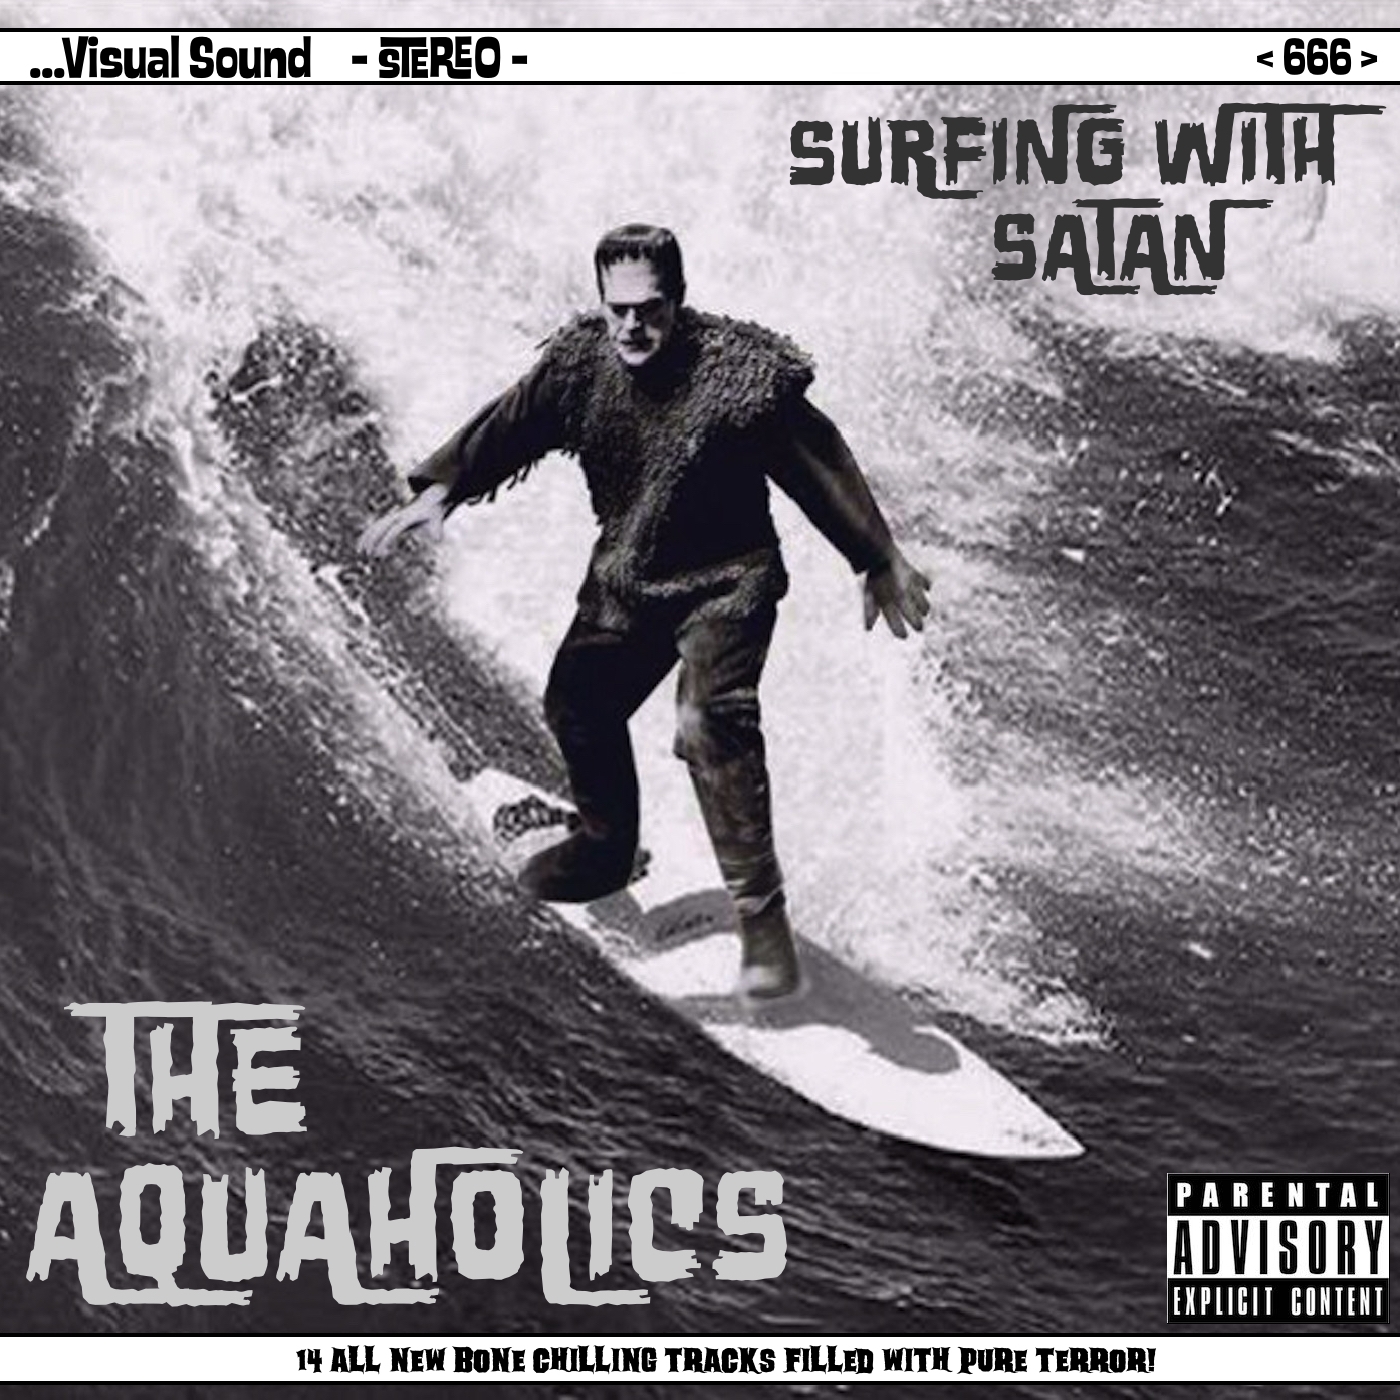 168482847 The Aquaholics "Surfing With Satan" - SHARAWAJI.COM